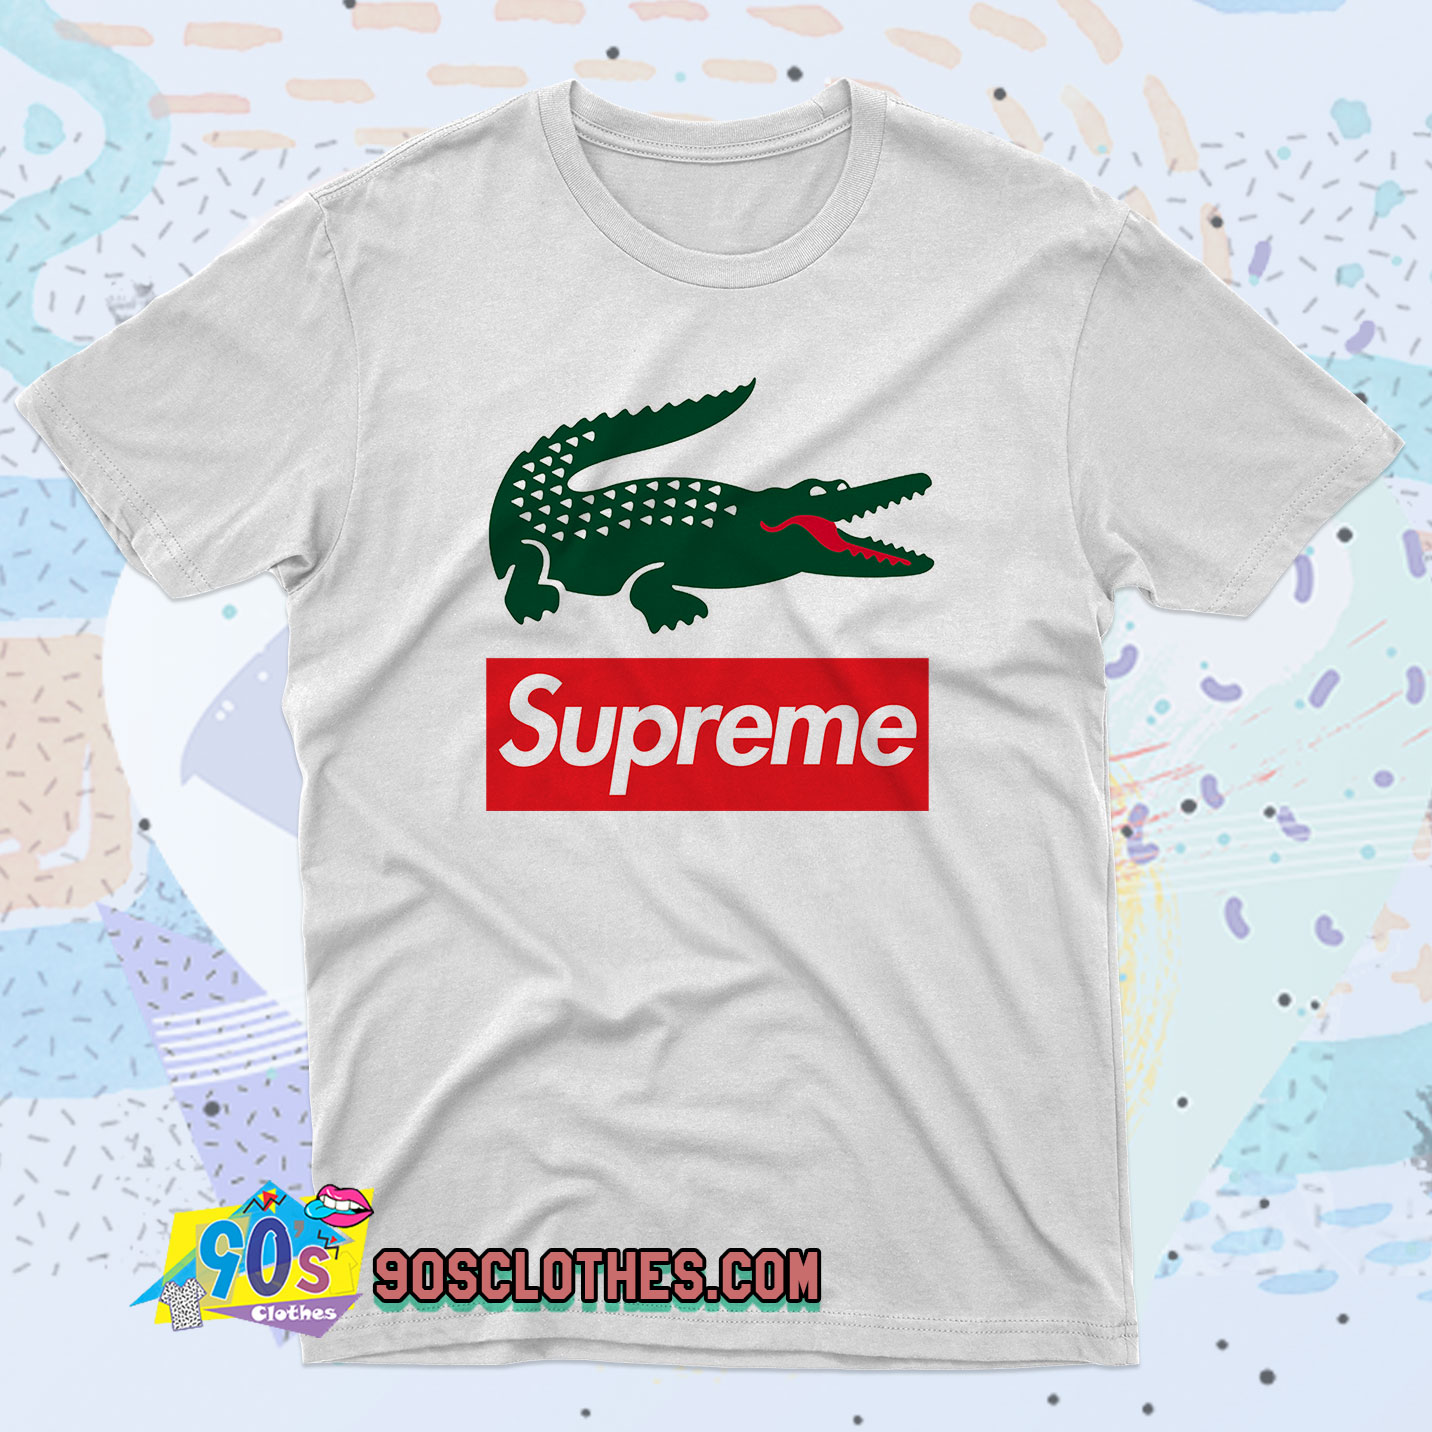 supreme lacoste shirt